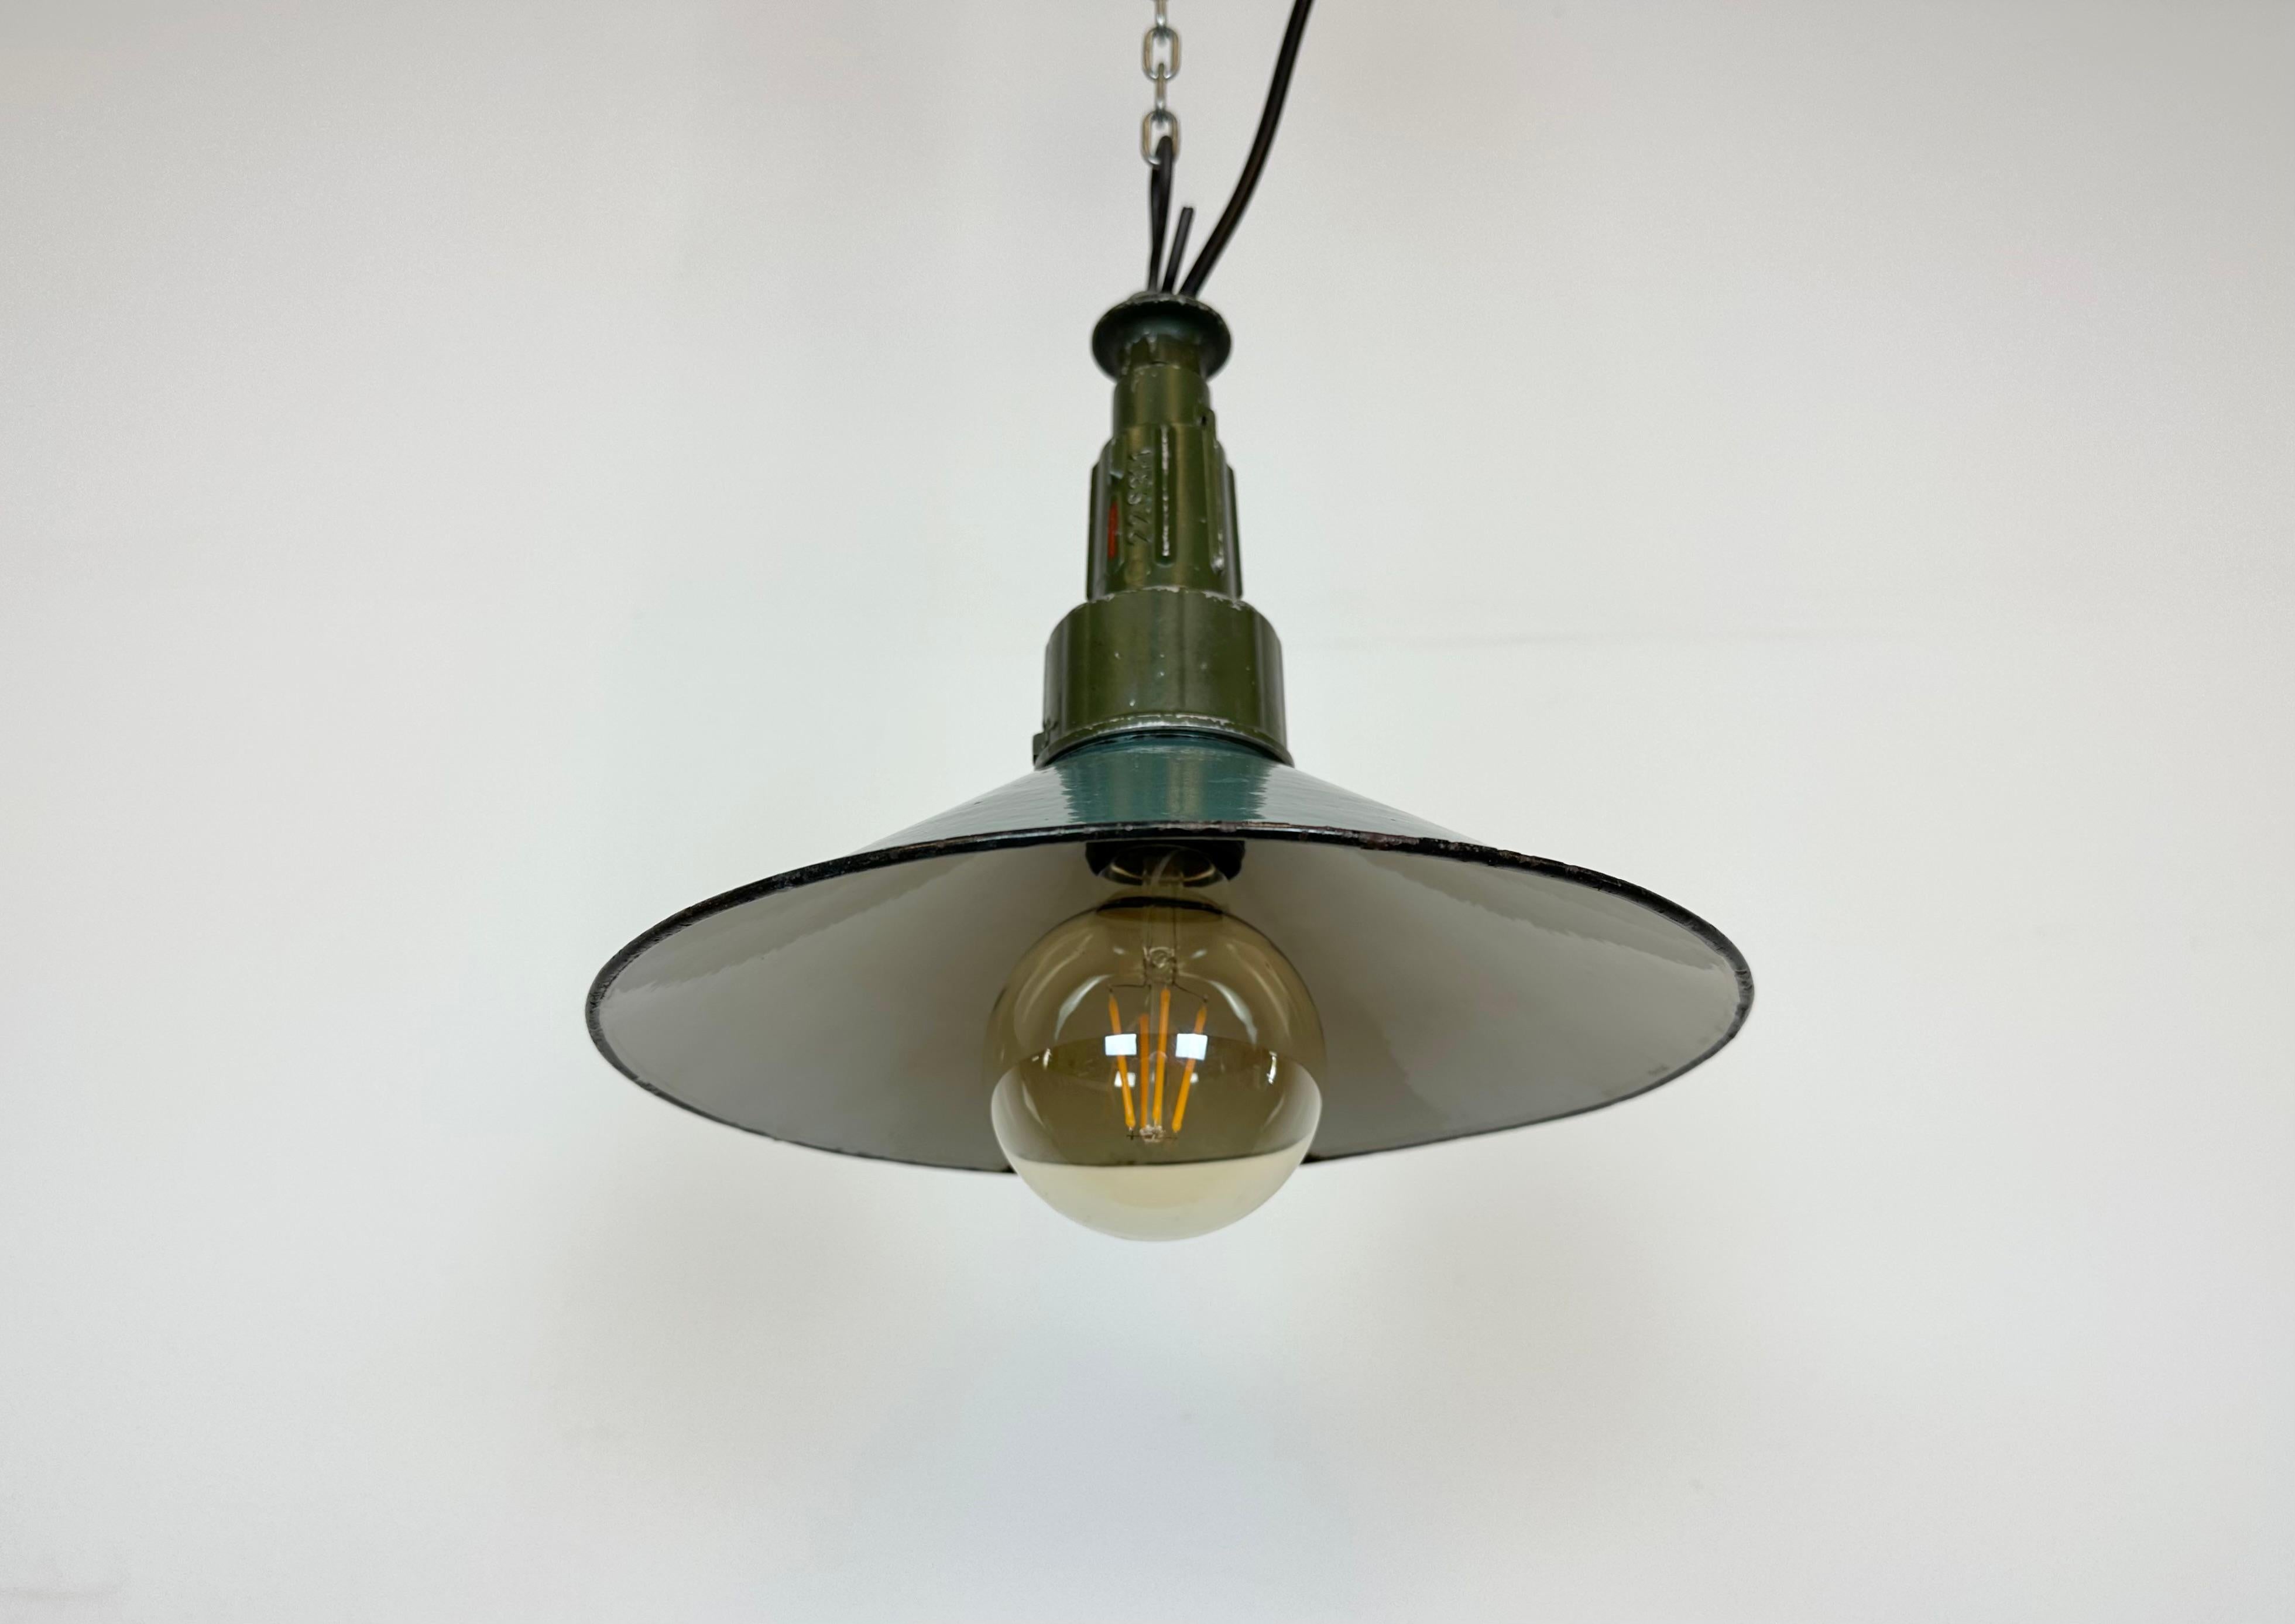 Aluminum Industrial Petrol Enamel Military Pendant Lamp with Cast Aluminium Top, 1960s For Sale